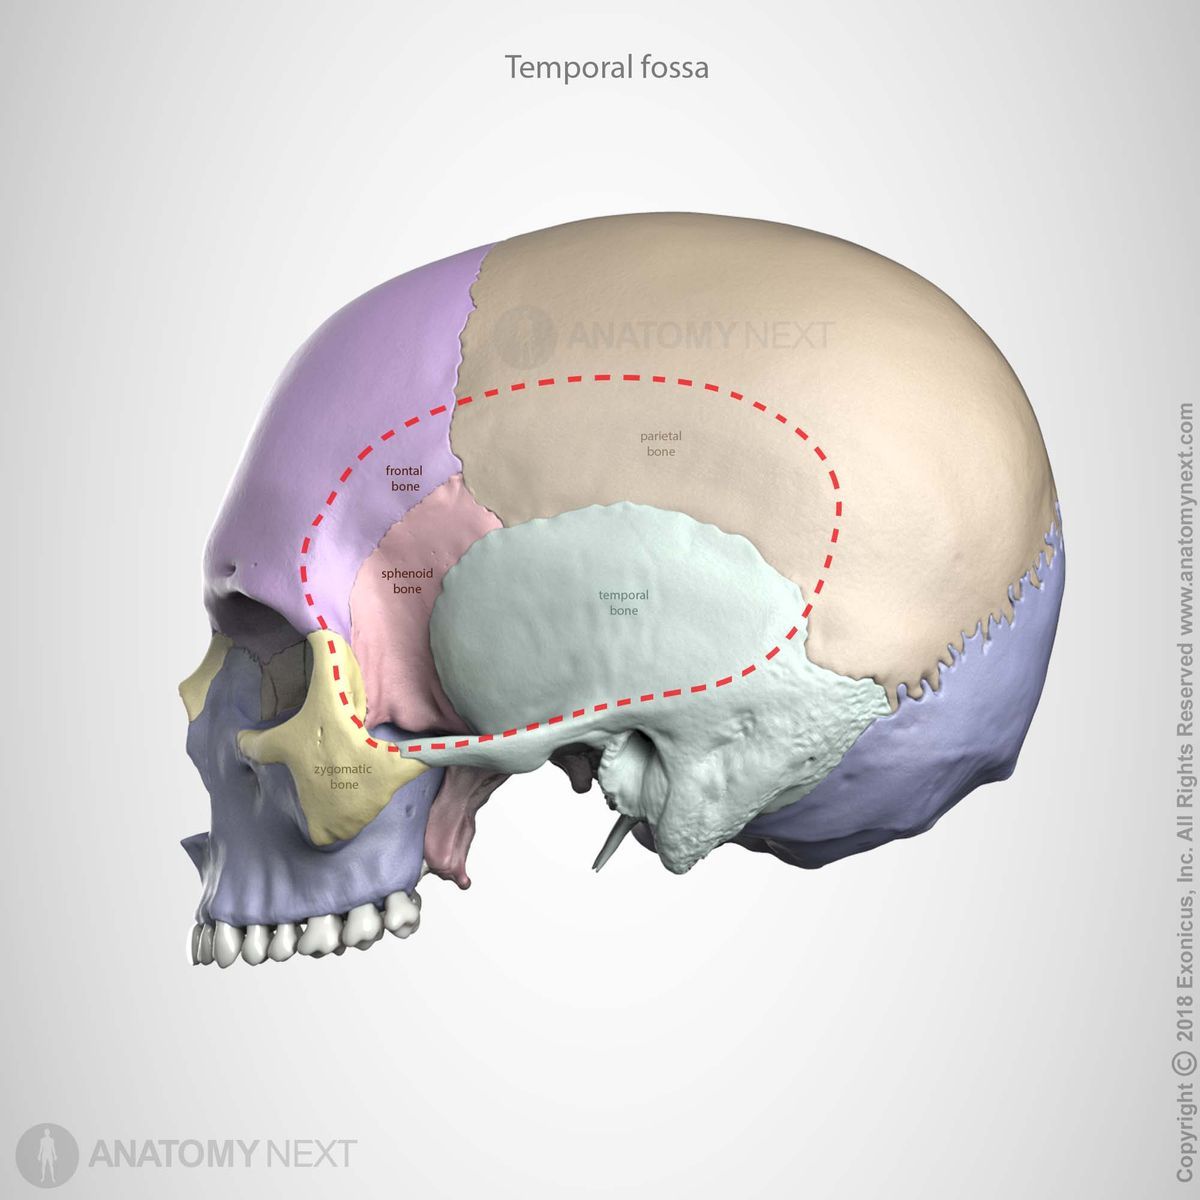 Cranial base, External cranial base, Temporal fossa, Bones of the temporal fossa 